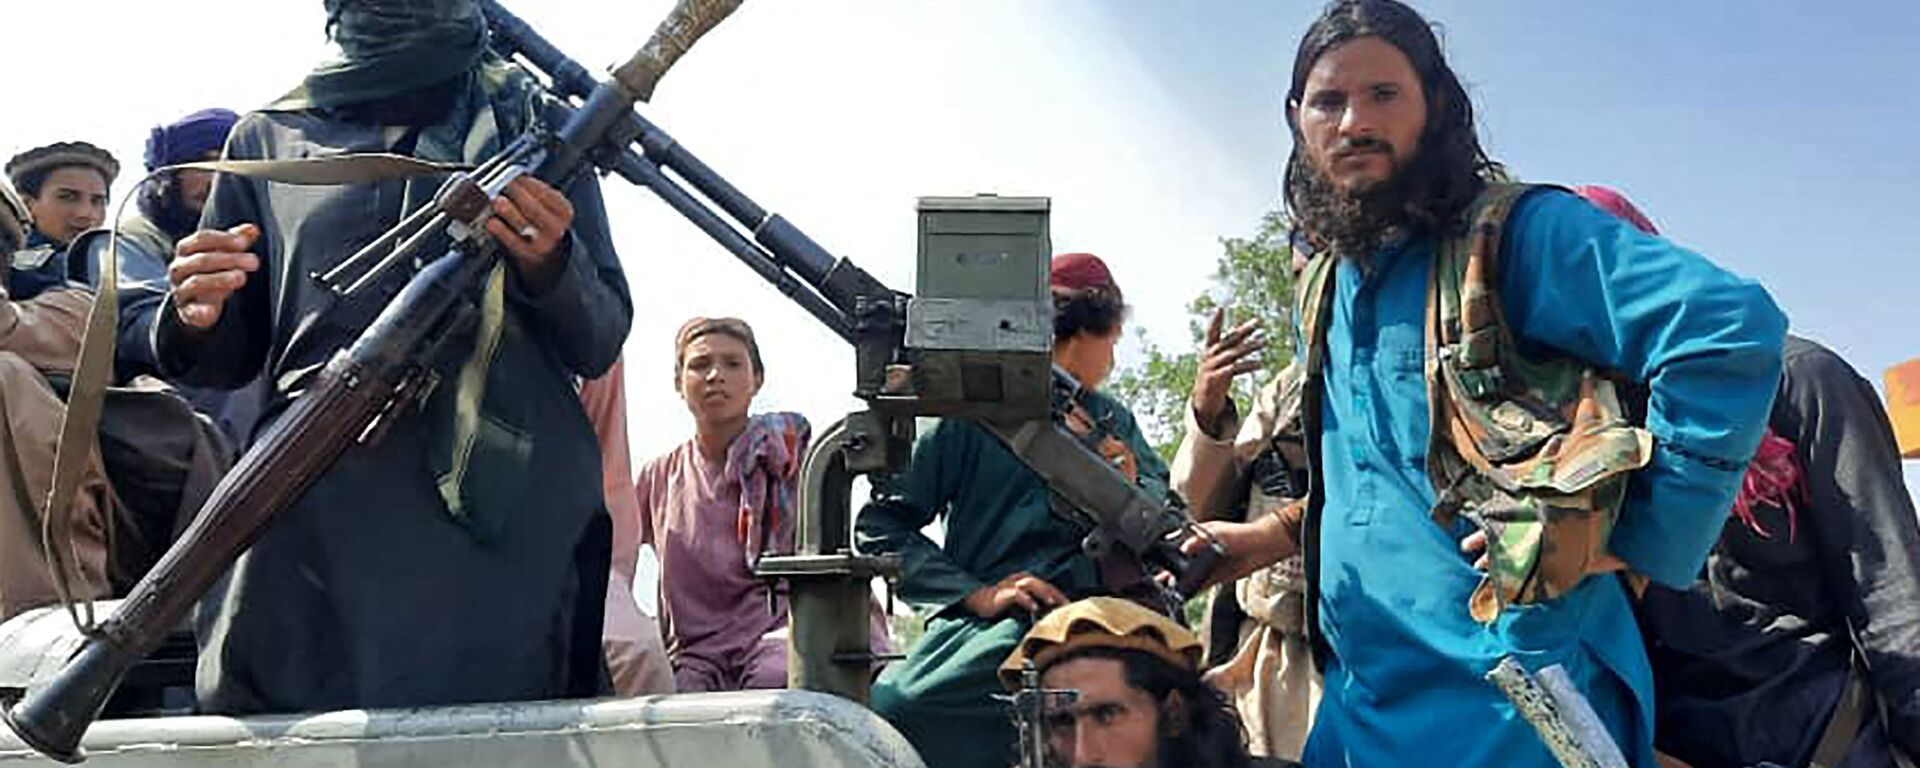 Милитанти Талибана* у провинцији Лагман, Авганистан - Sputnik Србија, 1920, 02.09.2021